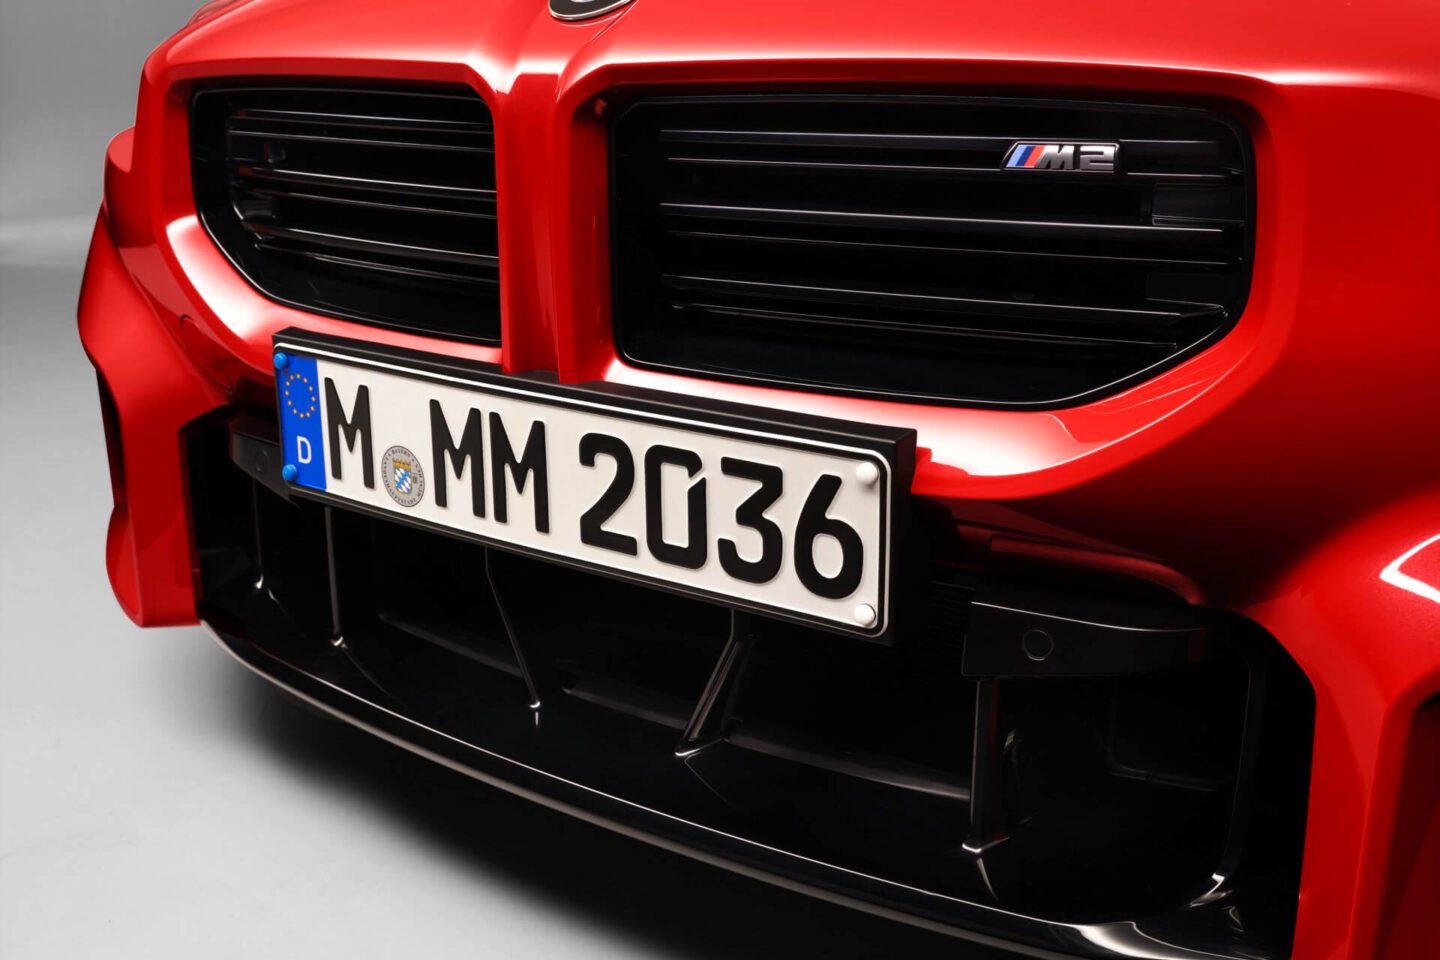 BMW M2 Front Grille Details